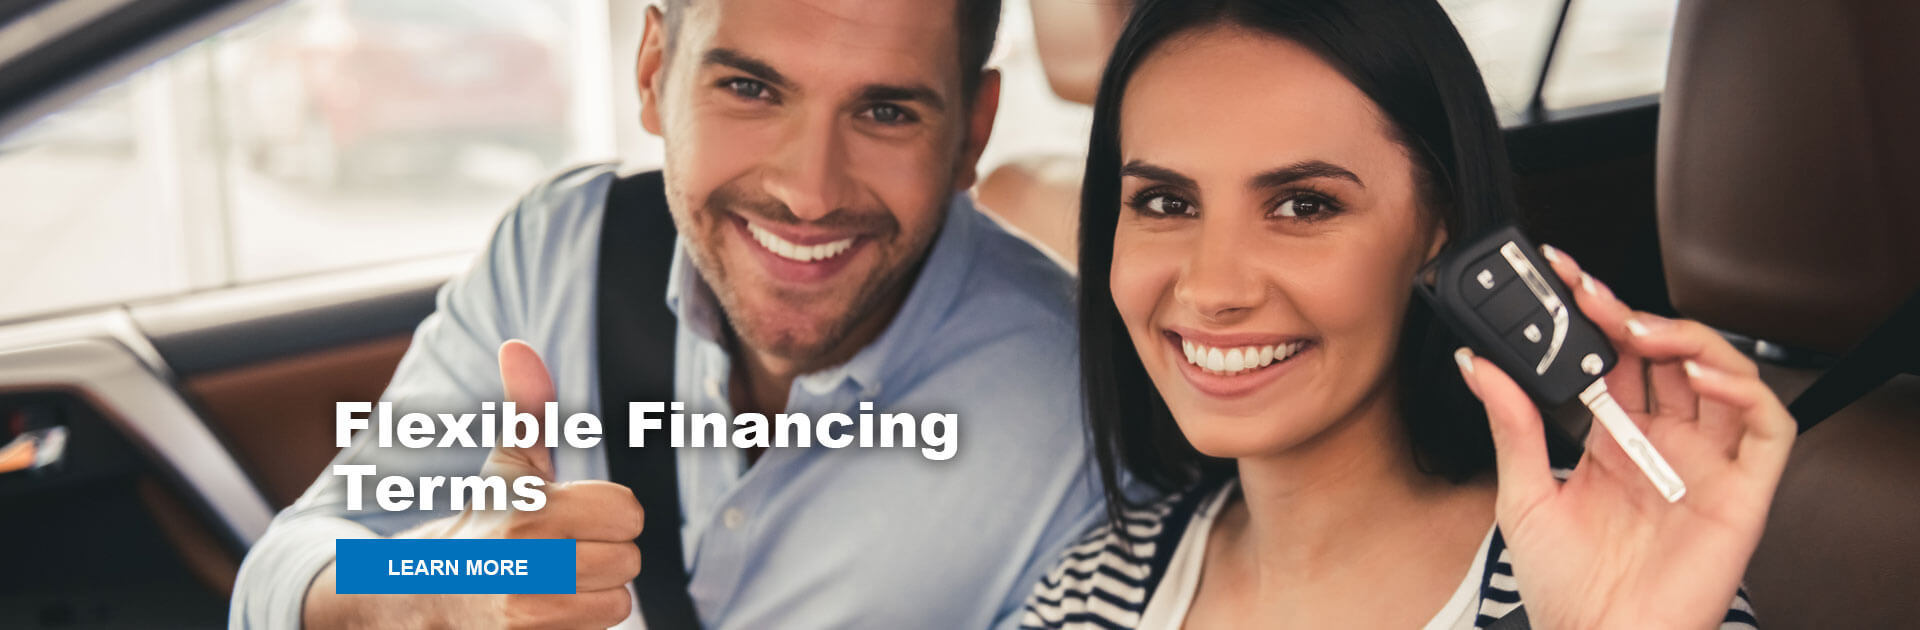 Flexible Financing Terms